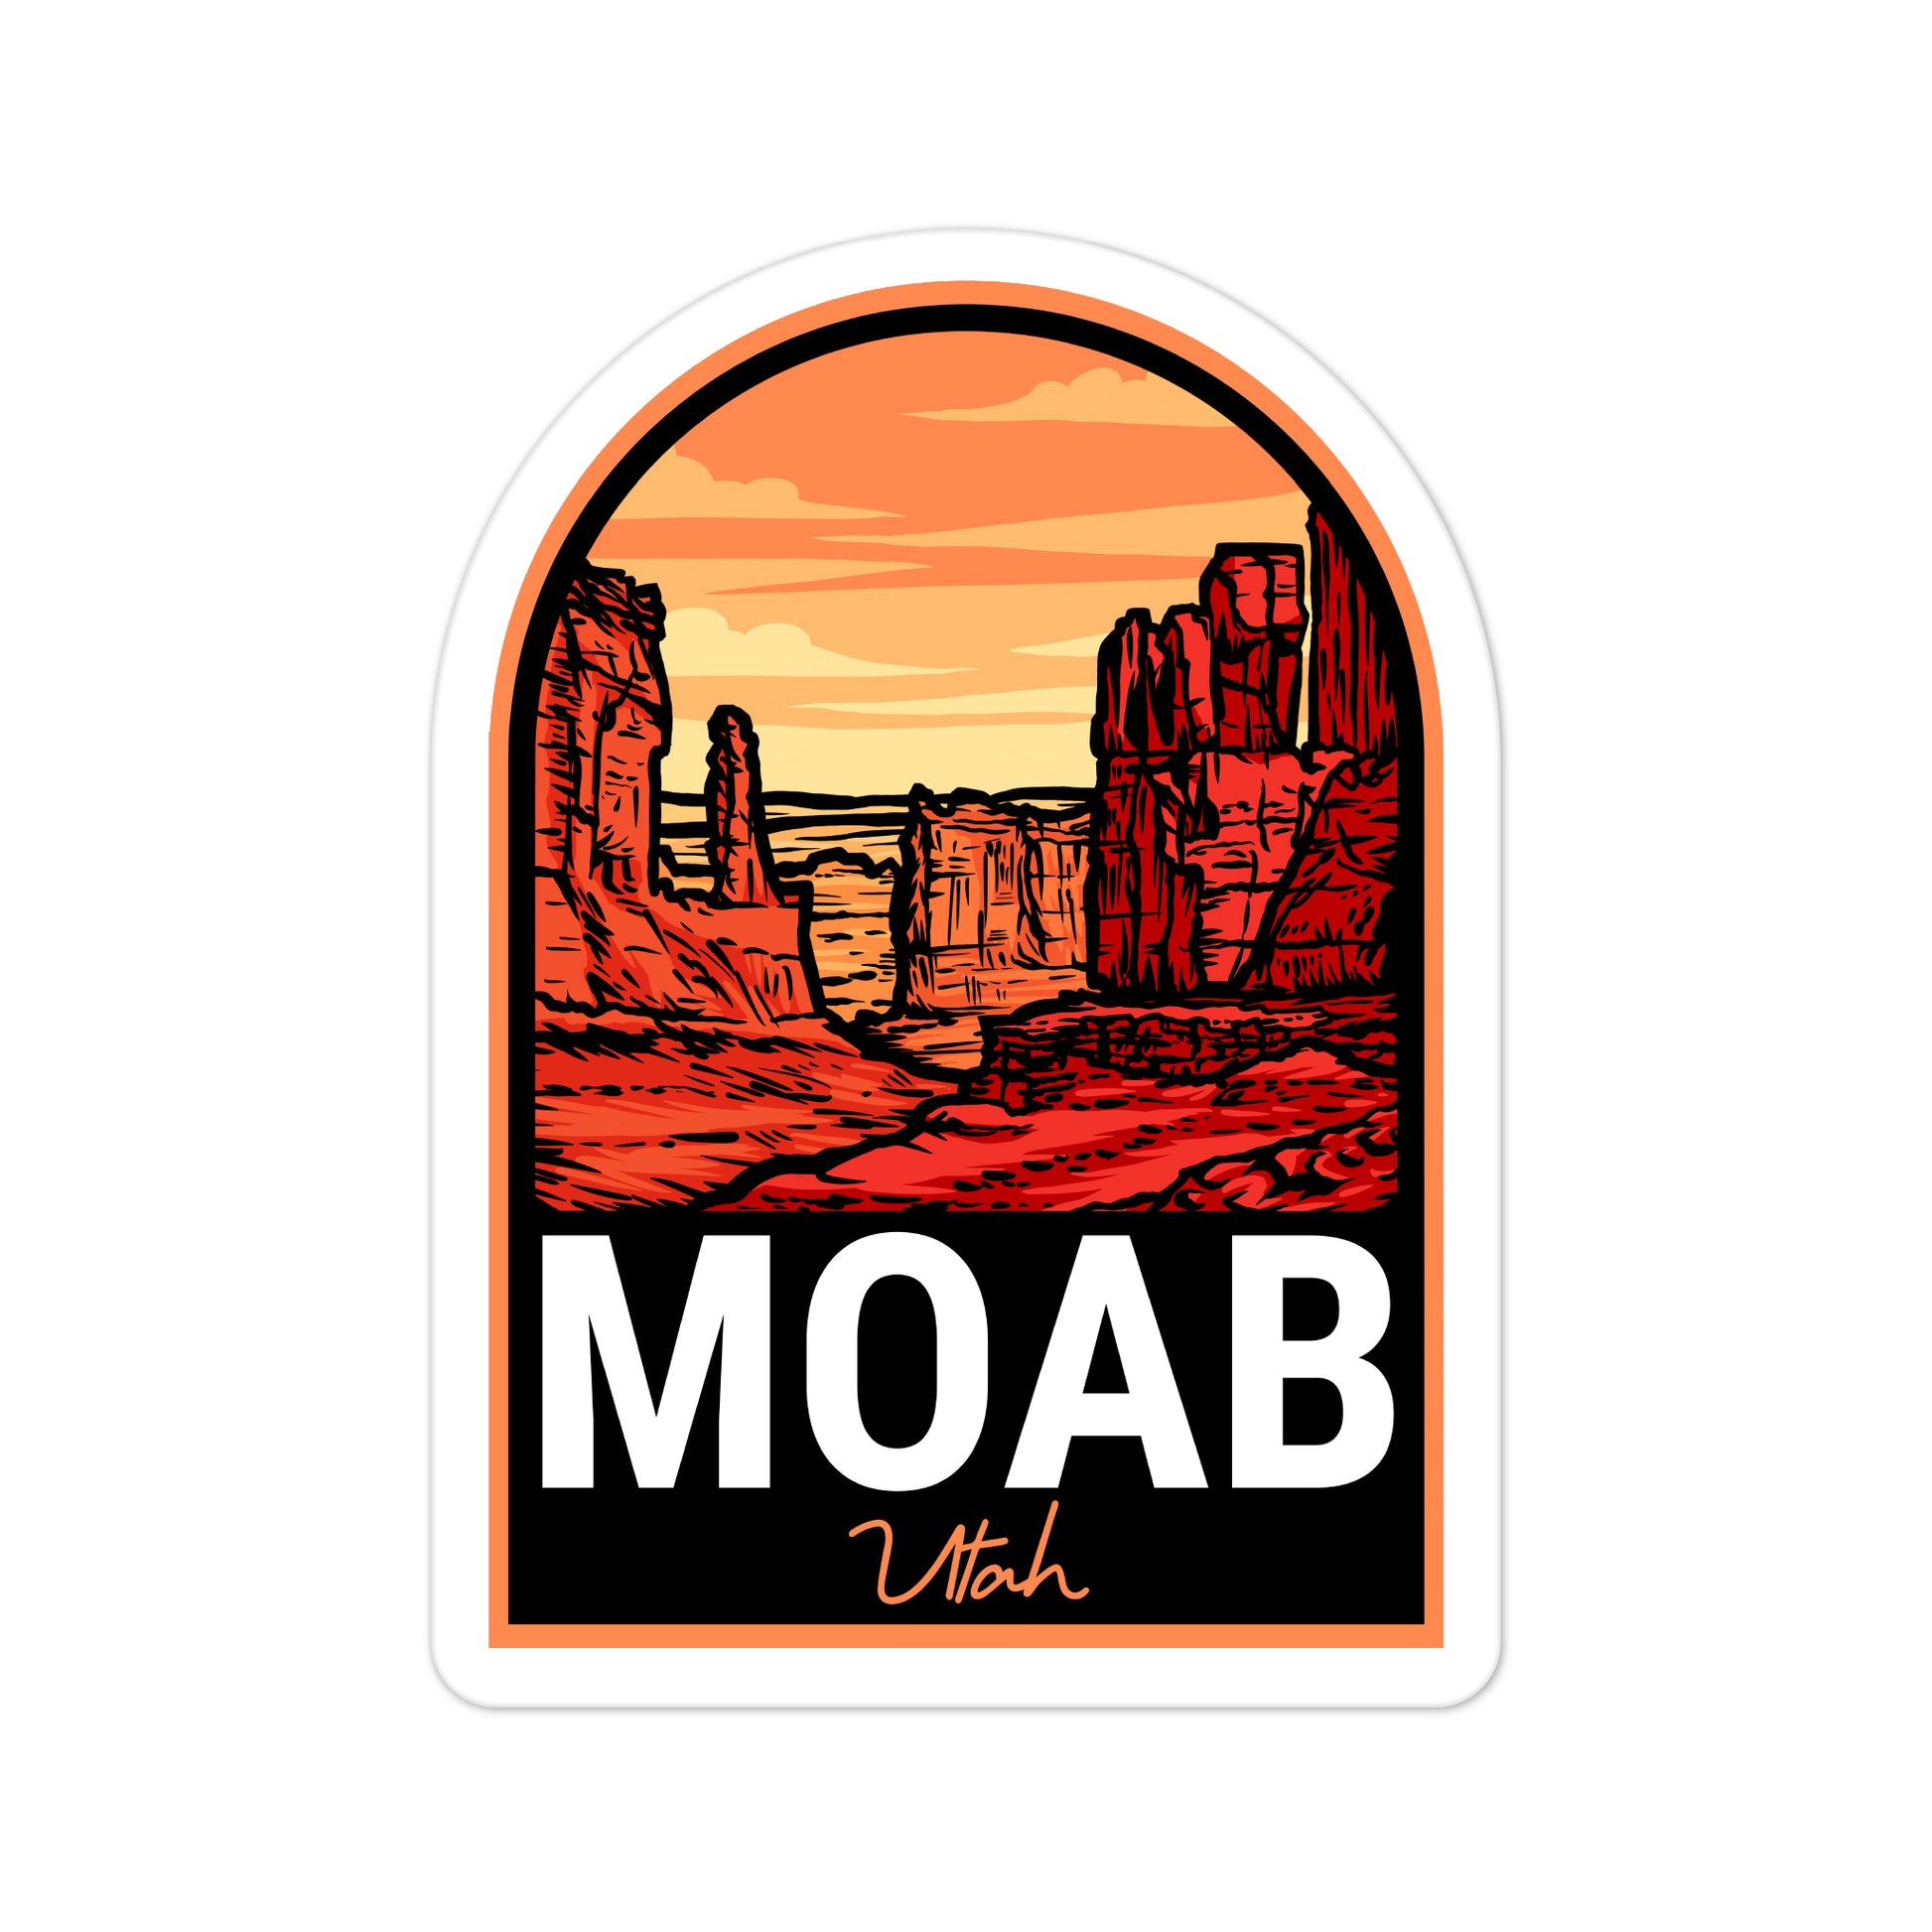 A sticker of Moab Utah